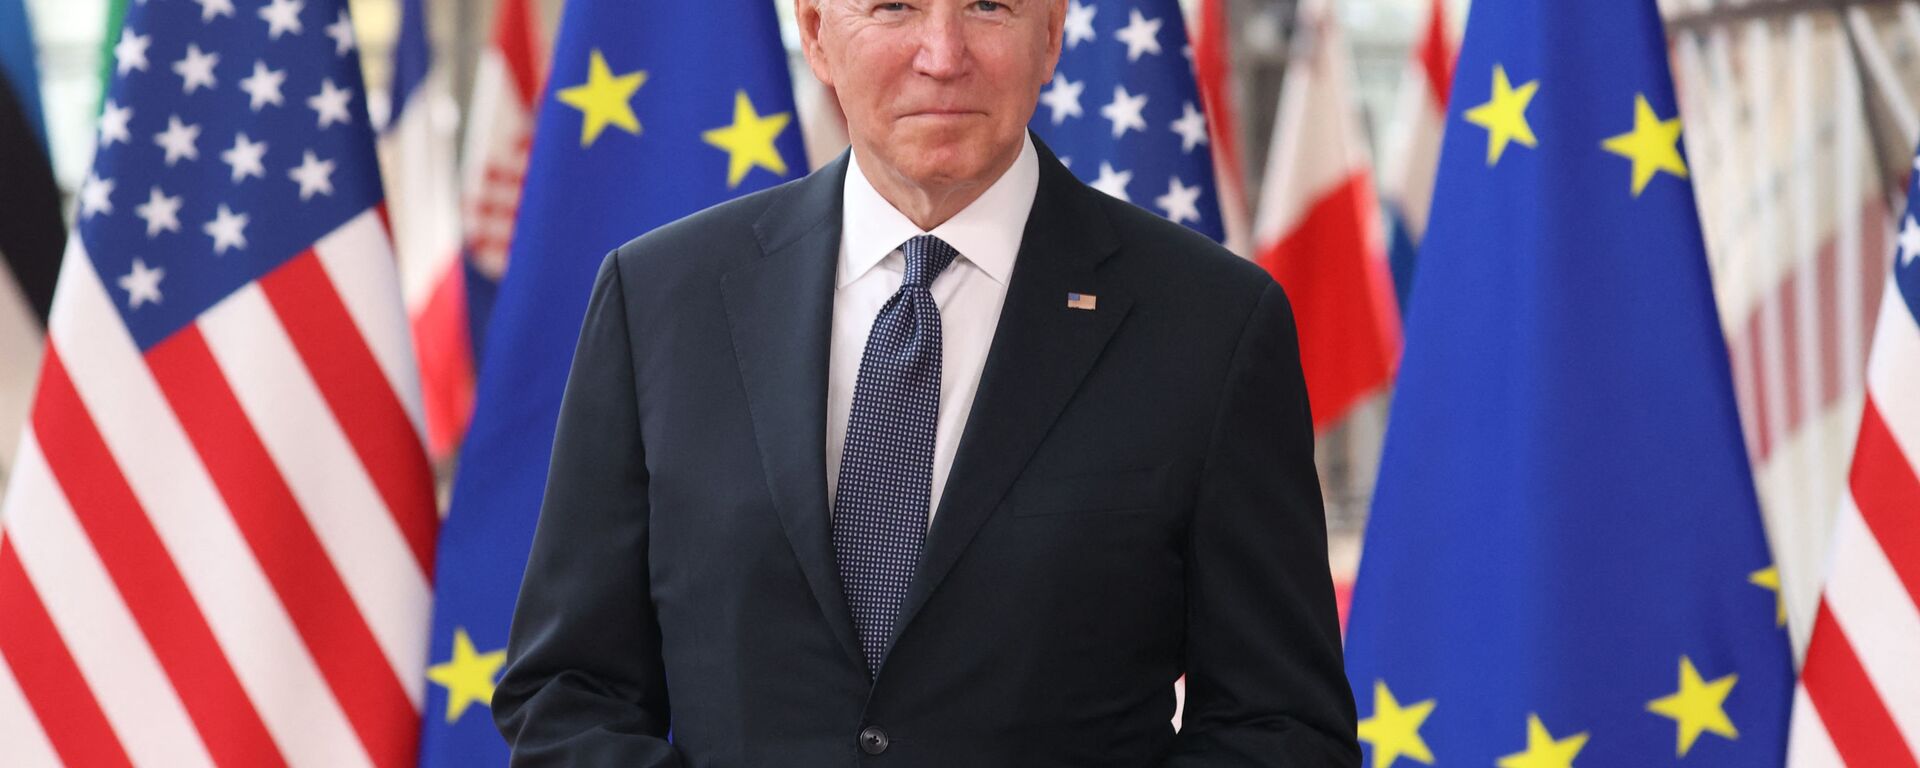 US President Joe Biden arrives for an EU - US summit at the European Union headquarters in Brussels on June 15, 2021.  - Sputnik International, 1920